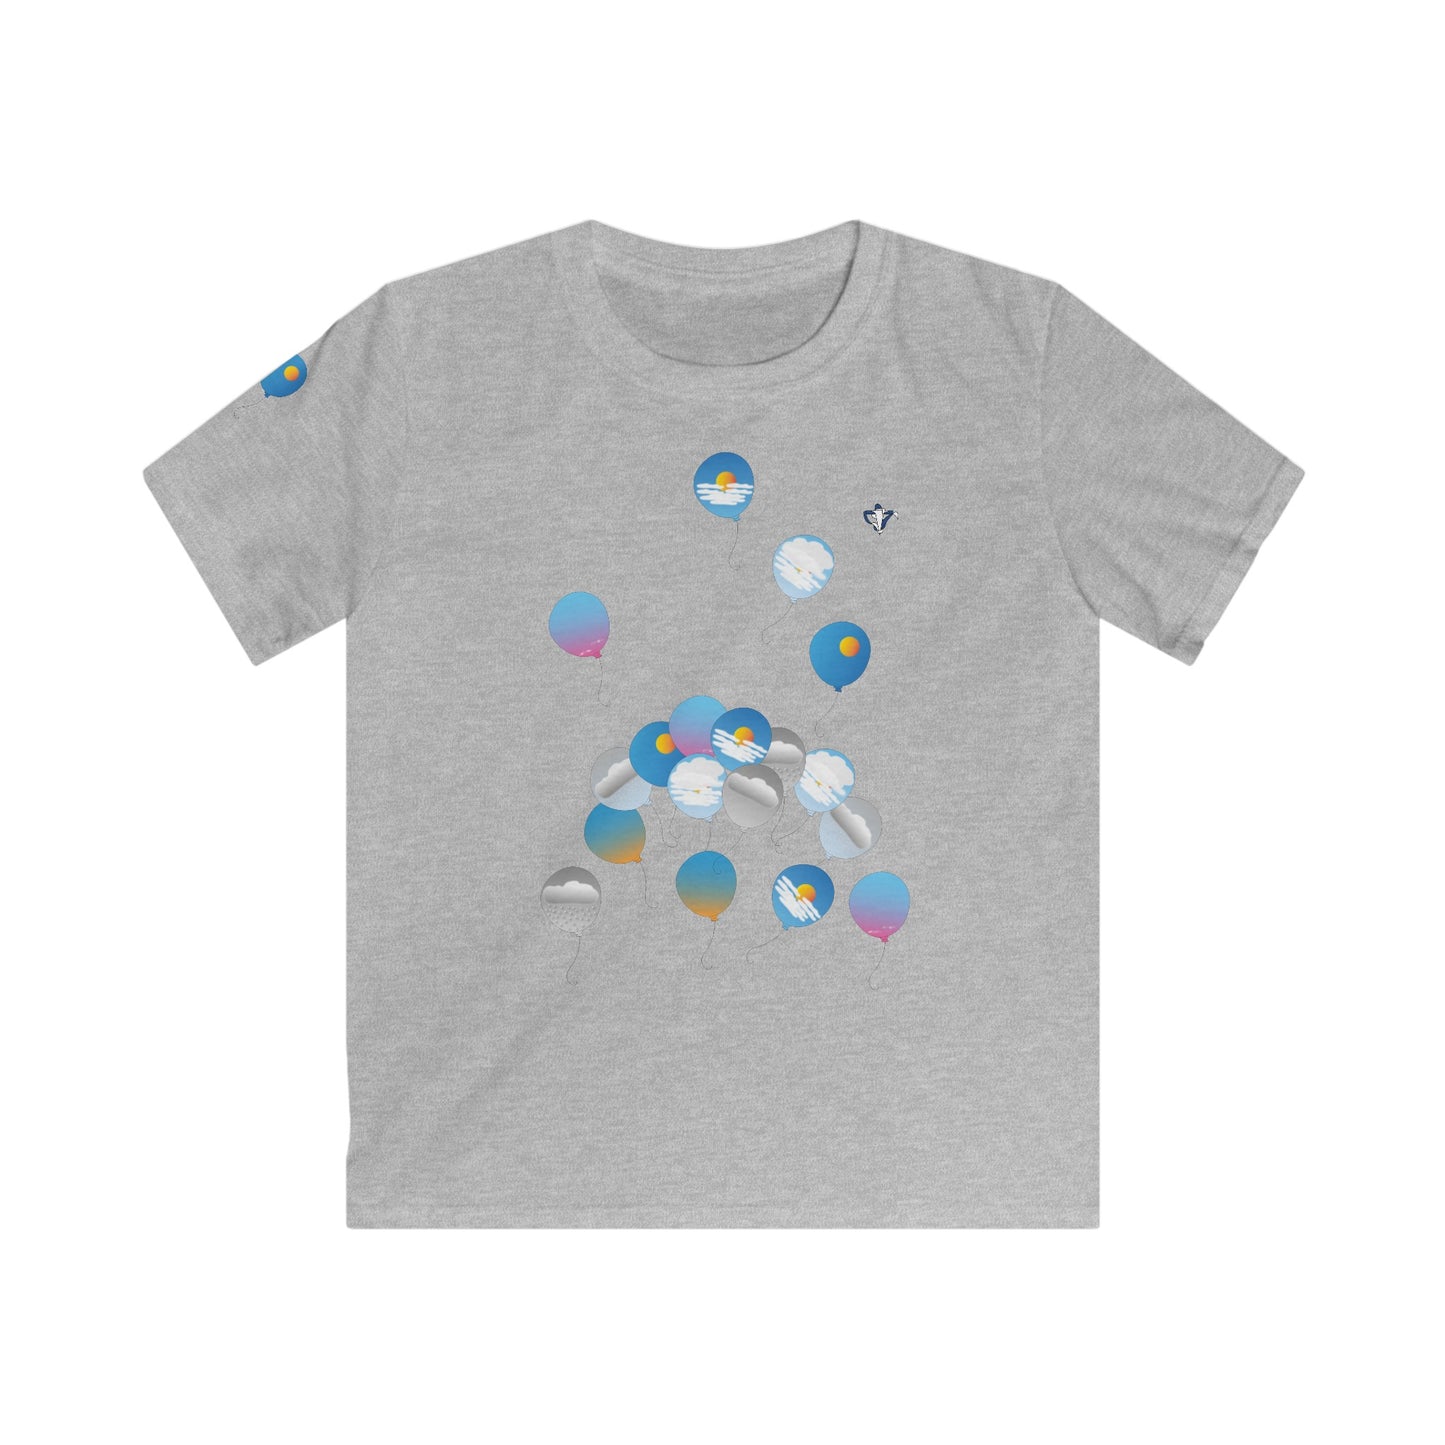 Tee-shirt enfant Ballons ciel (à personnaliser)